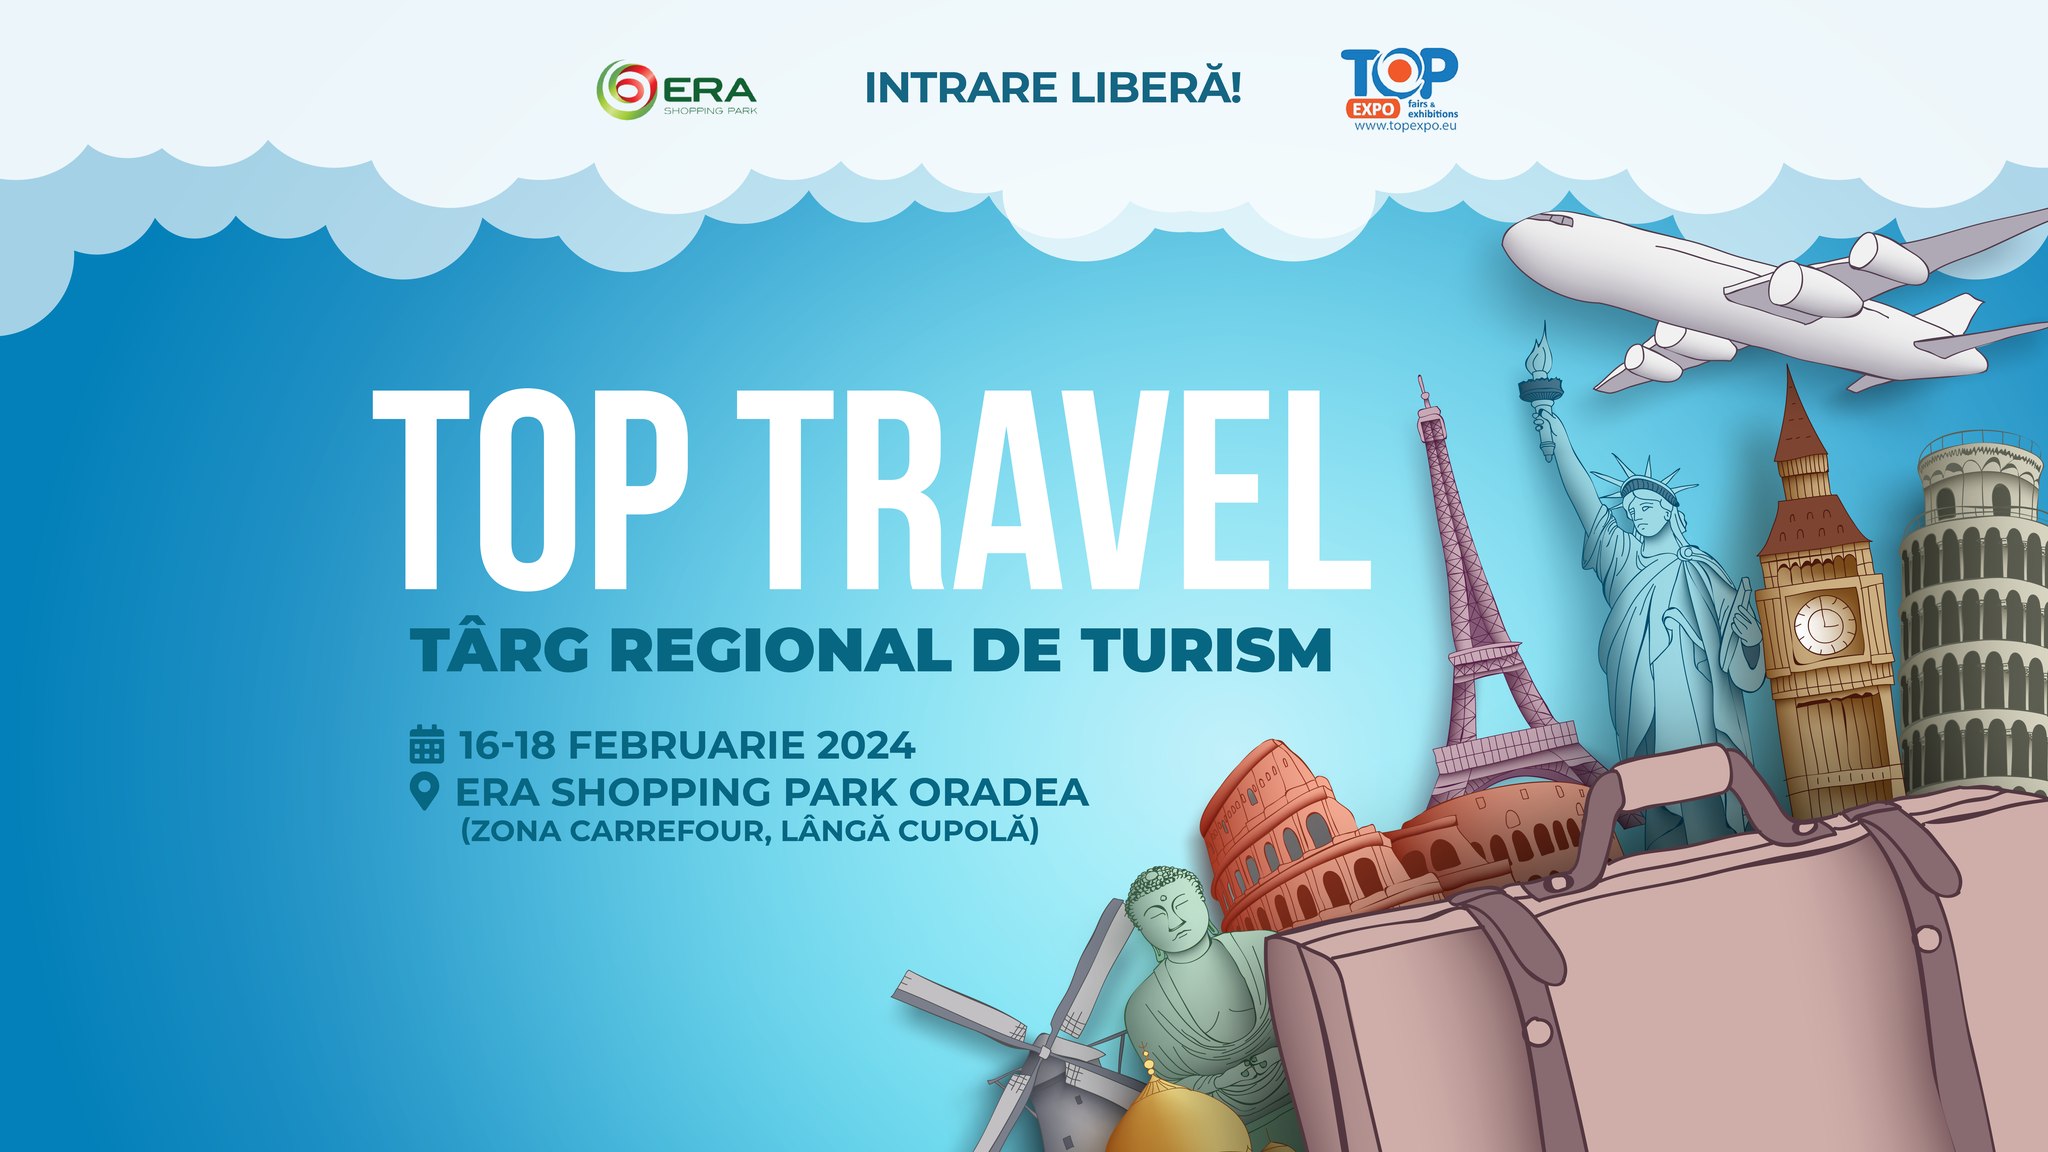 TOP TRAVEL targ regional de turism Oradea 16-18 februarie 2024